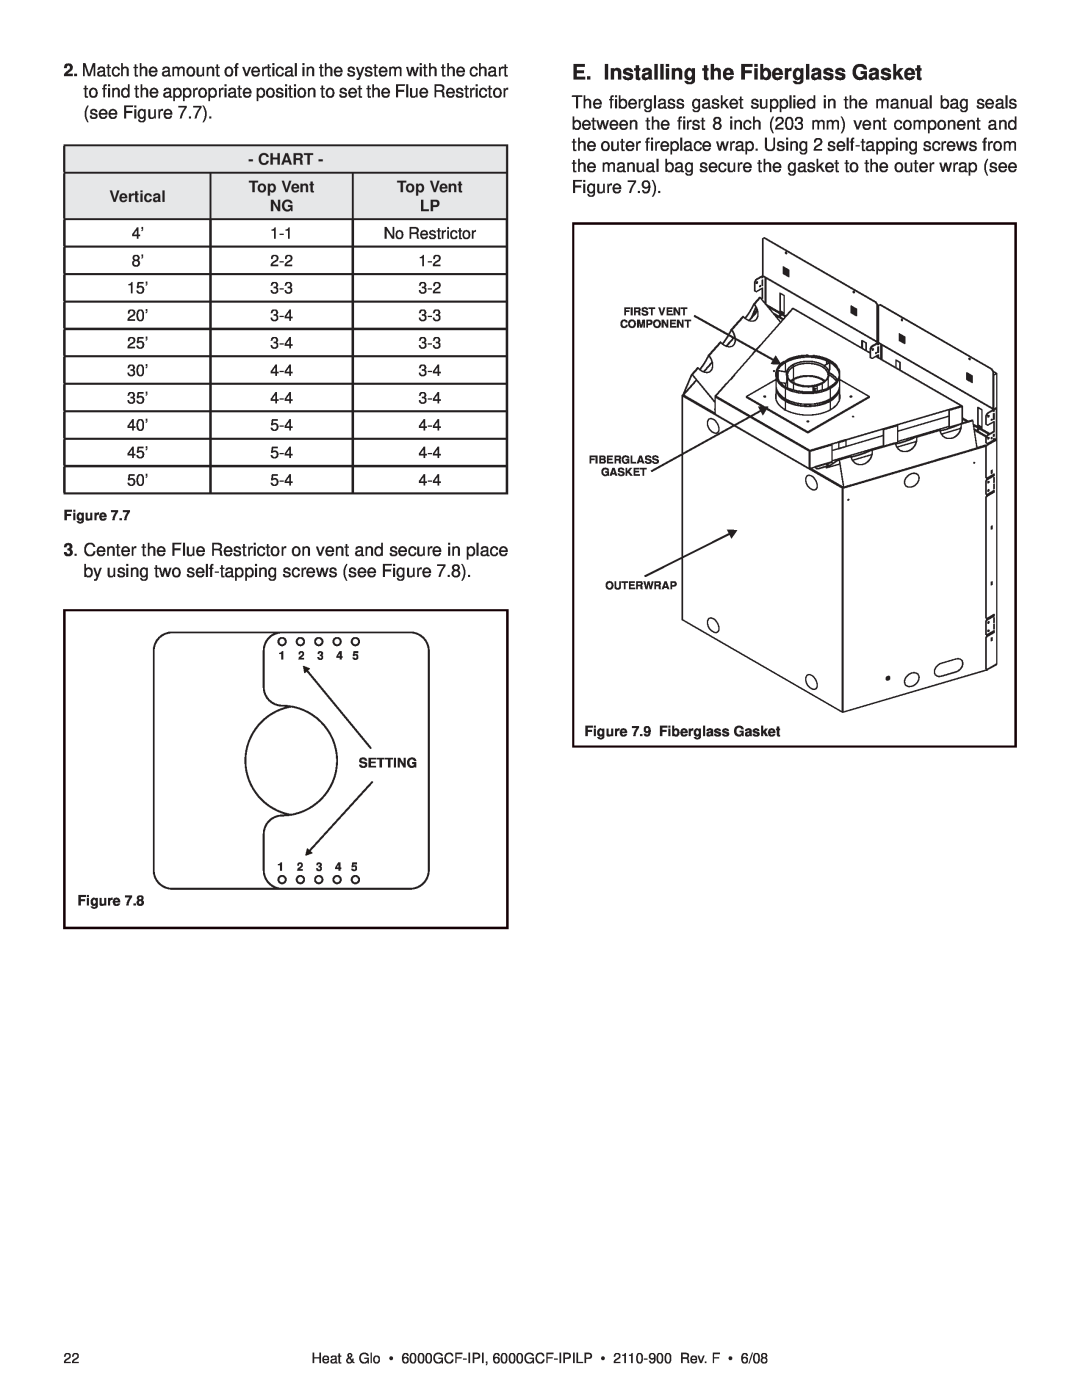 Heat & Glo LifeStyle 6000GCF-IPILP owner manual E. Installing the Fiberglass Gasket, Chart, Vertical, Top Vent 